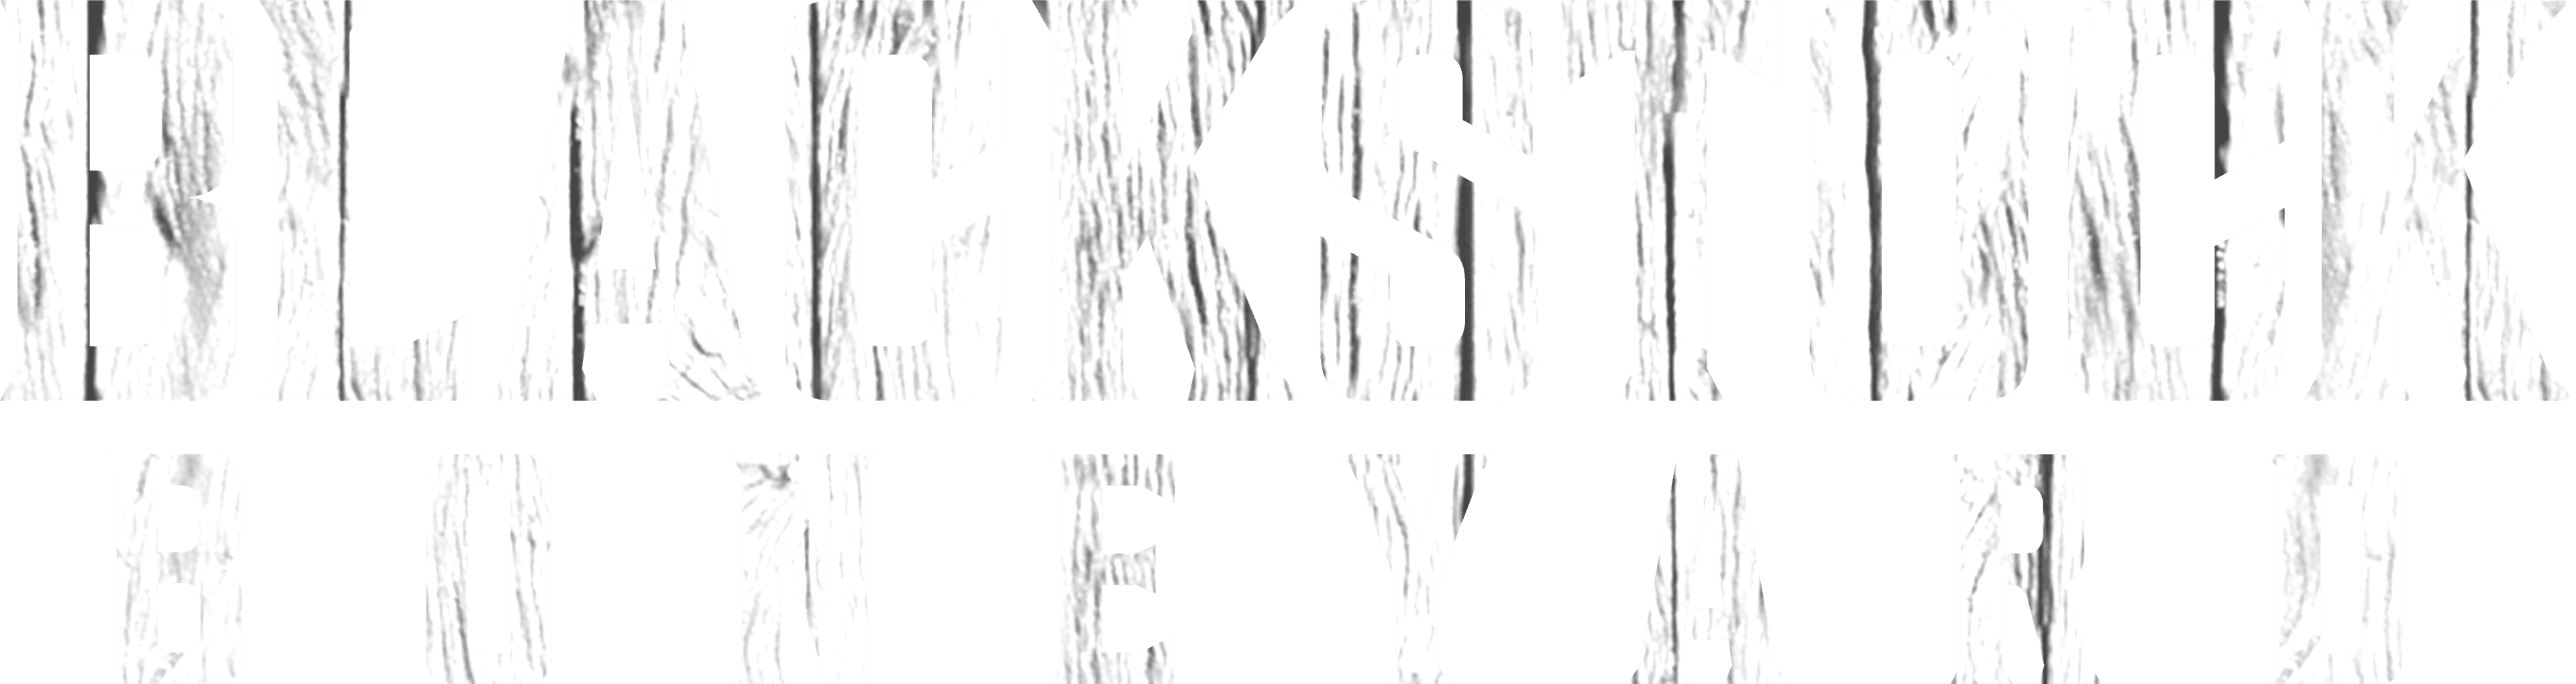 Blackstock Boneyard logo